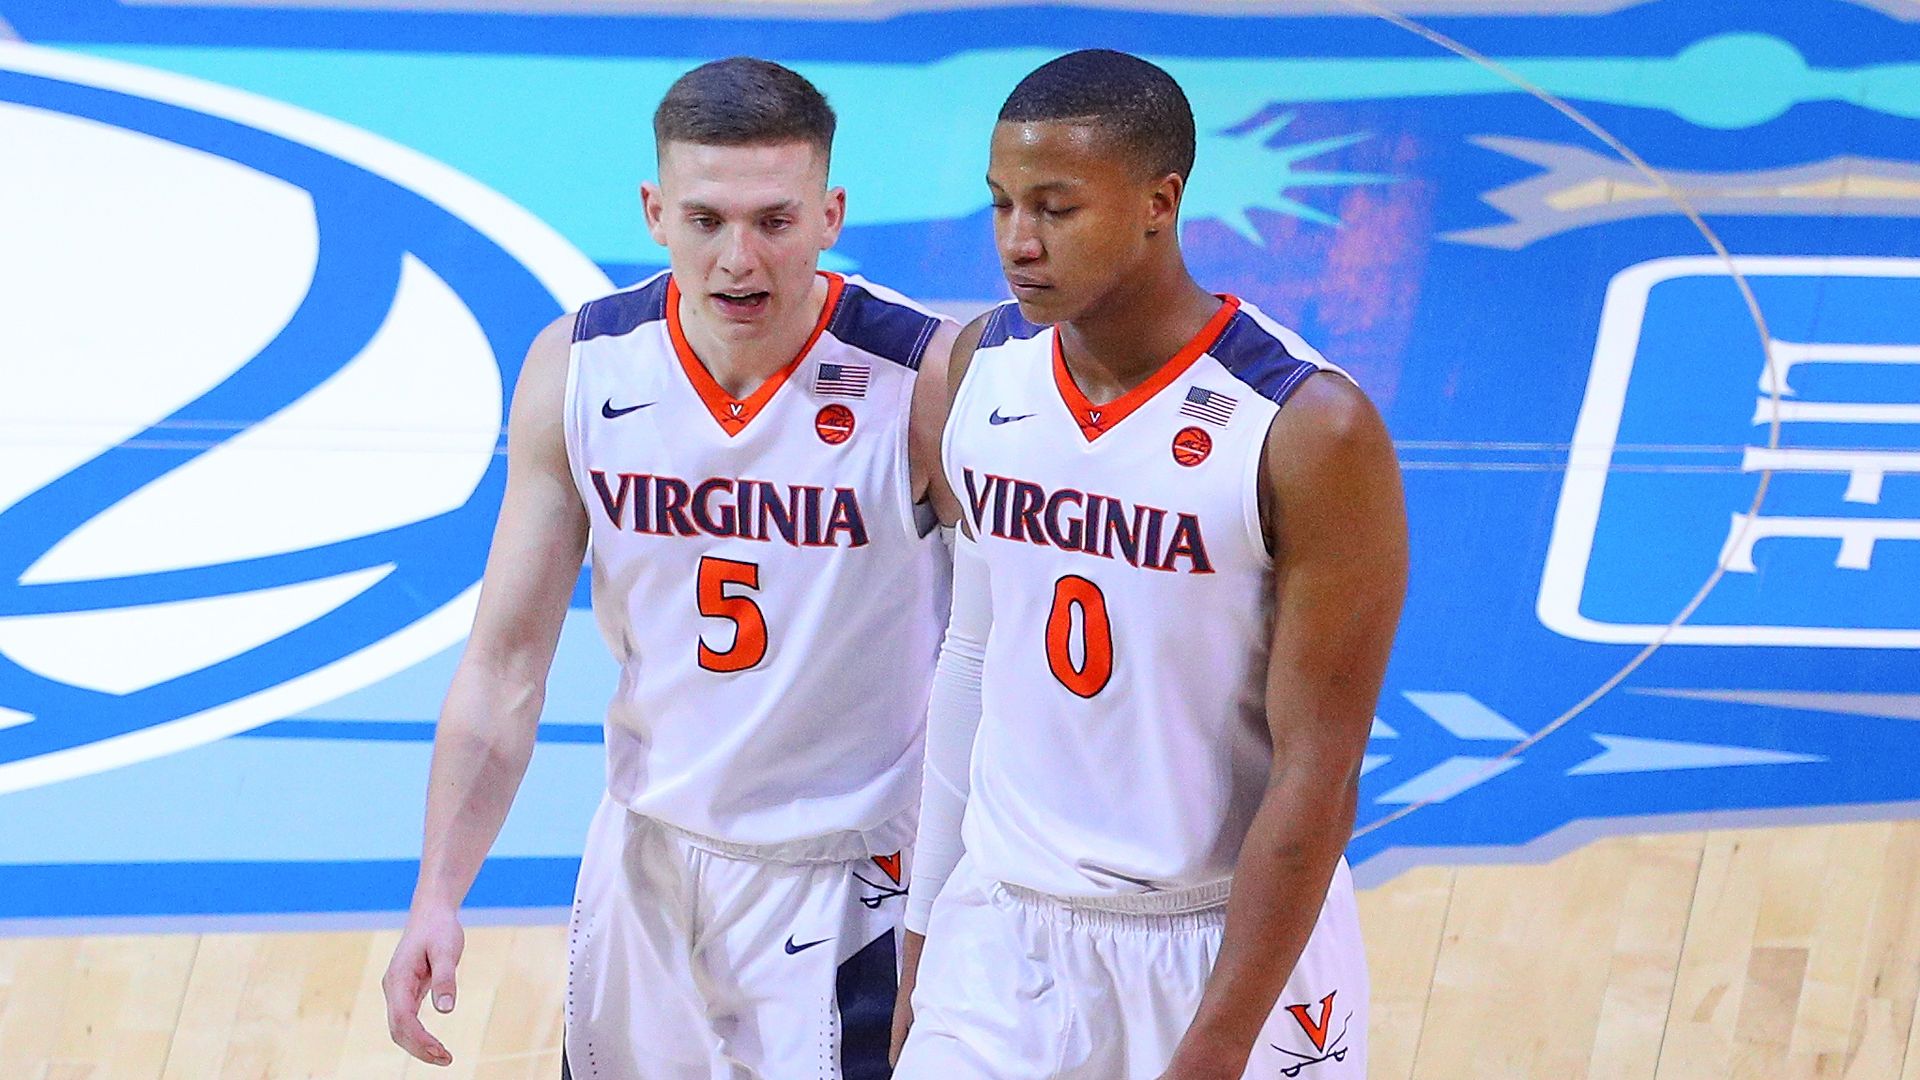 Two University of Virginia basketball players.